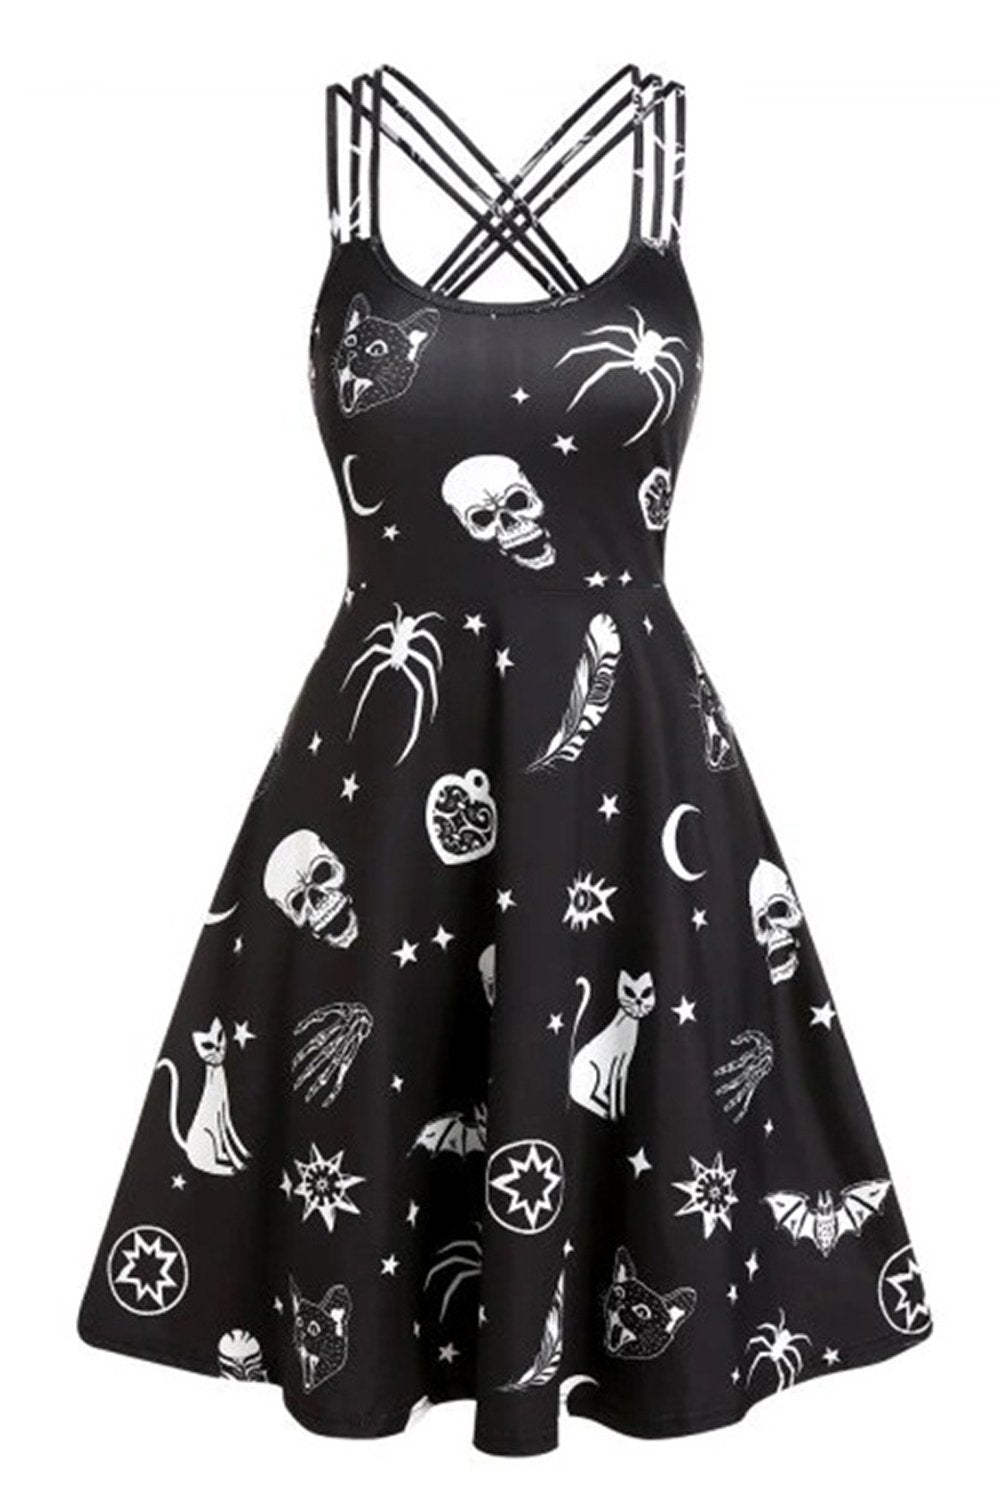 Black Skull Print Pin Up Vintage Dress